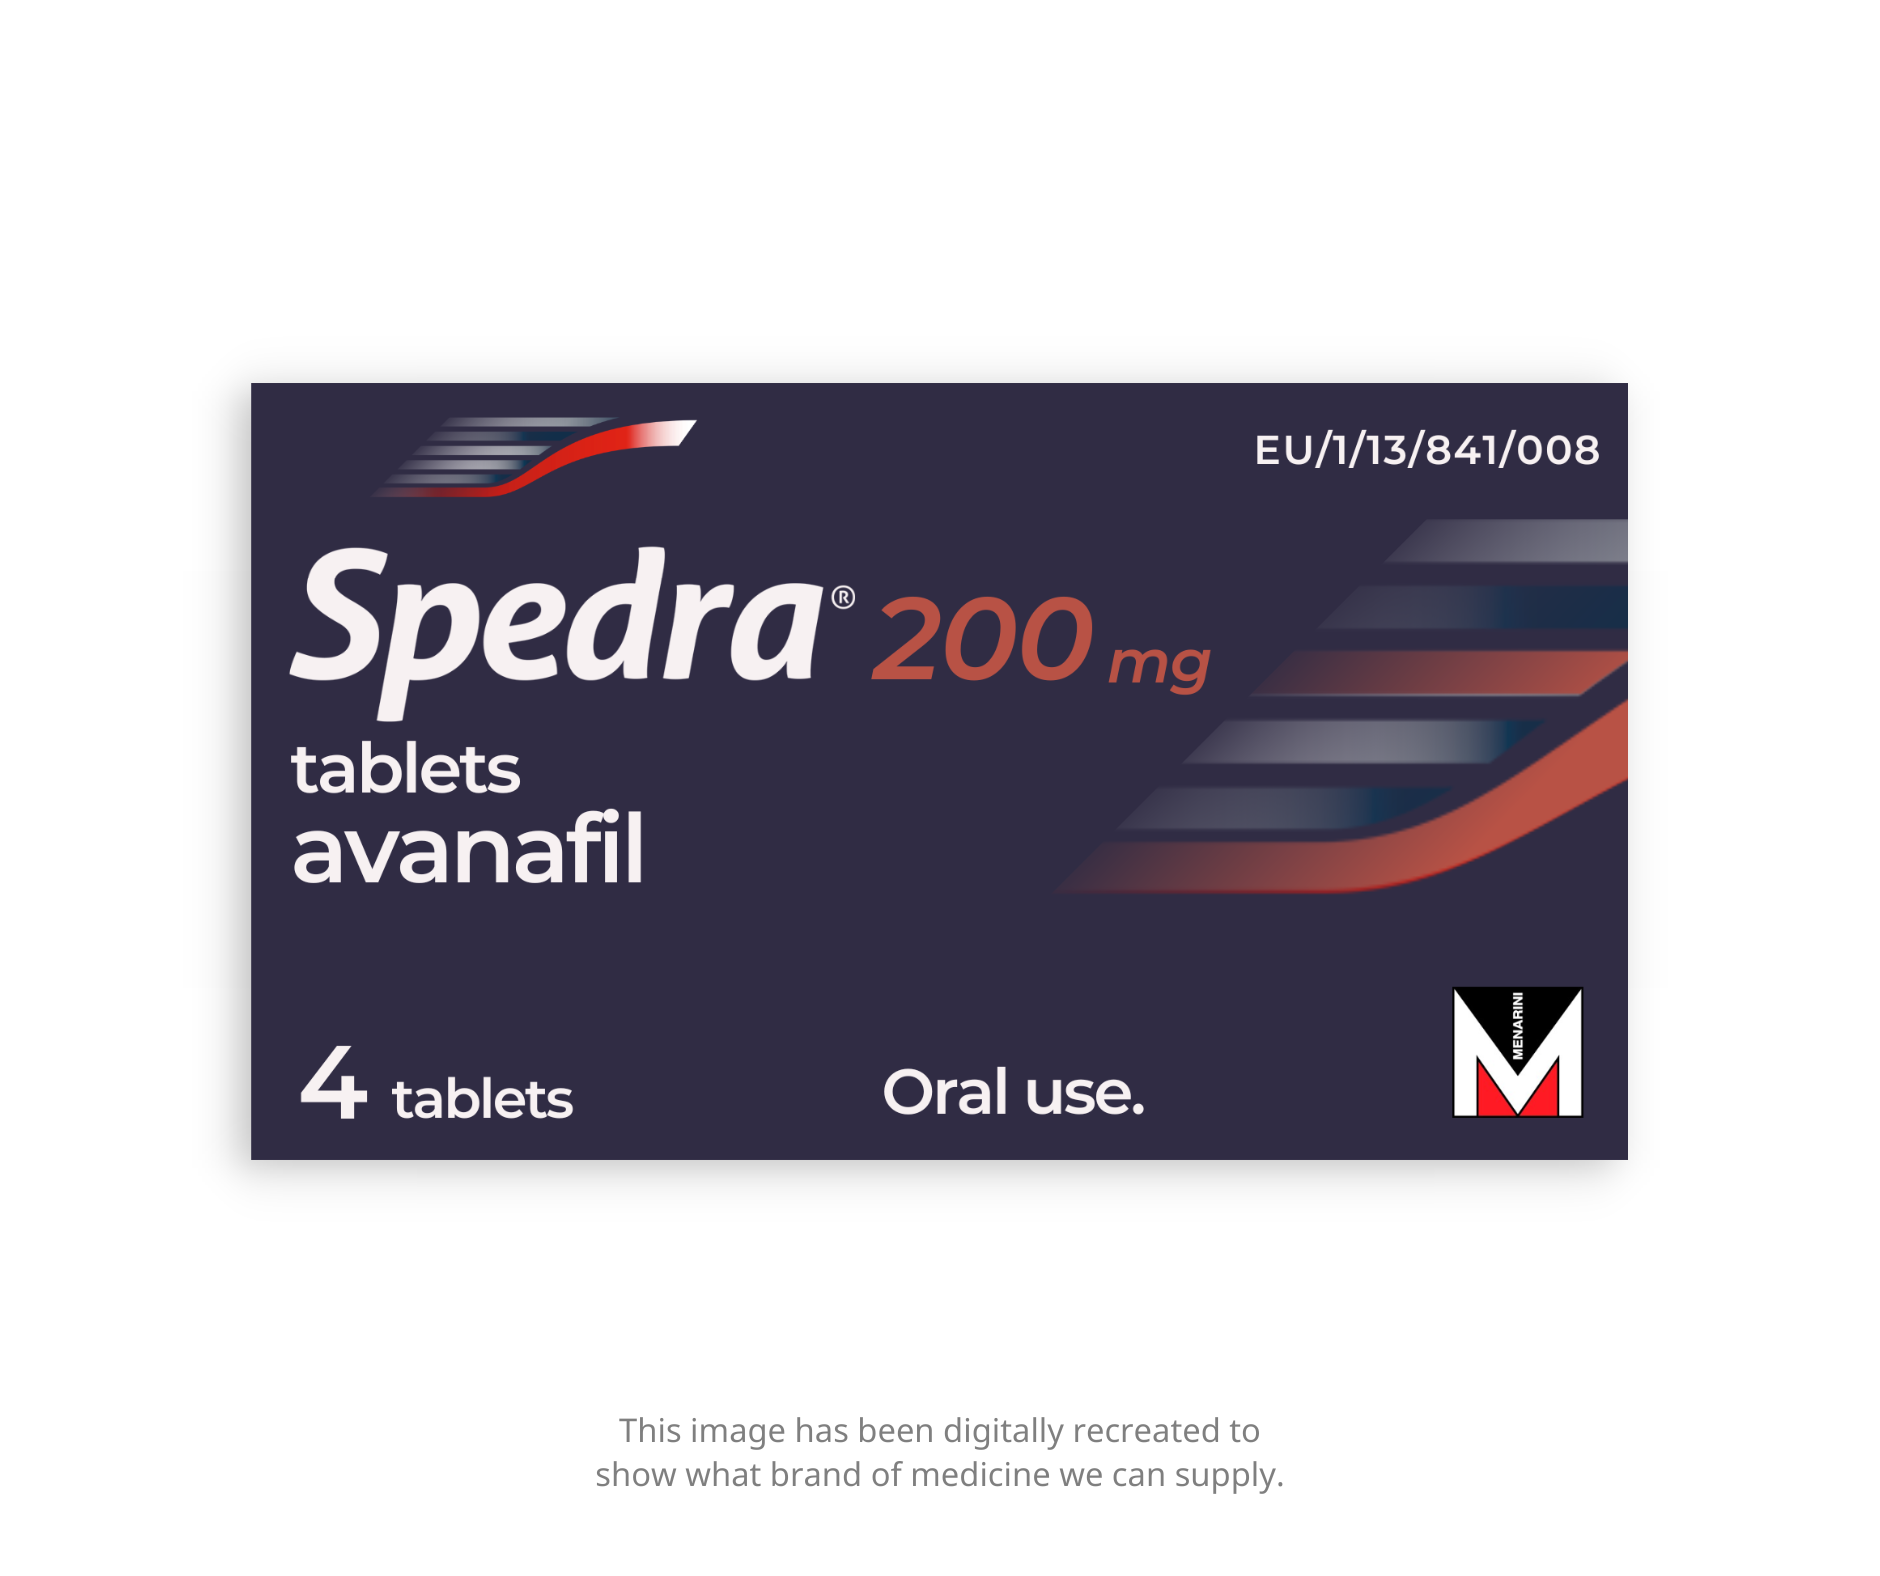 Spedra Avanafil 200mg example packaging